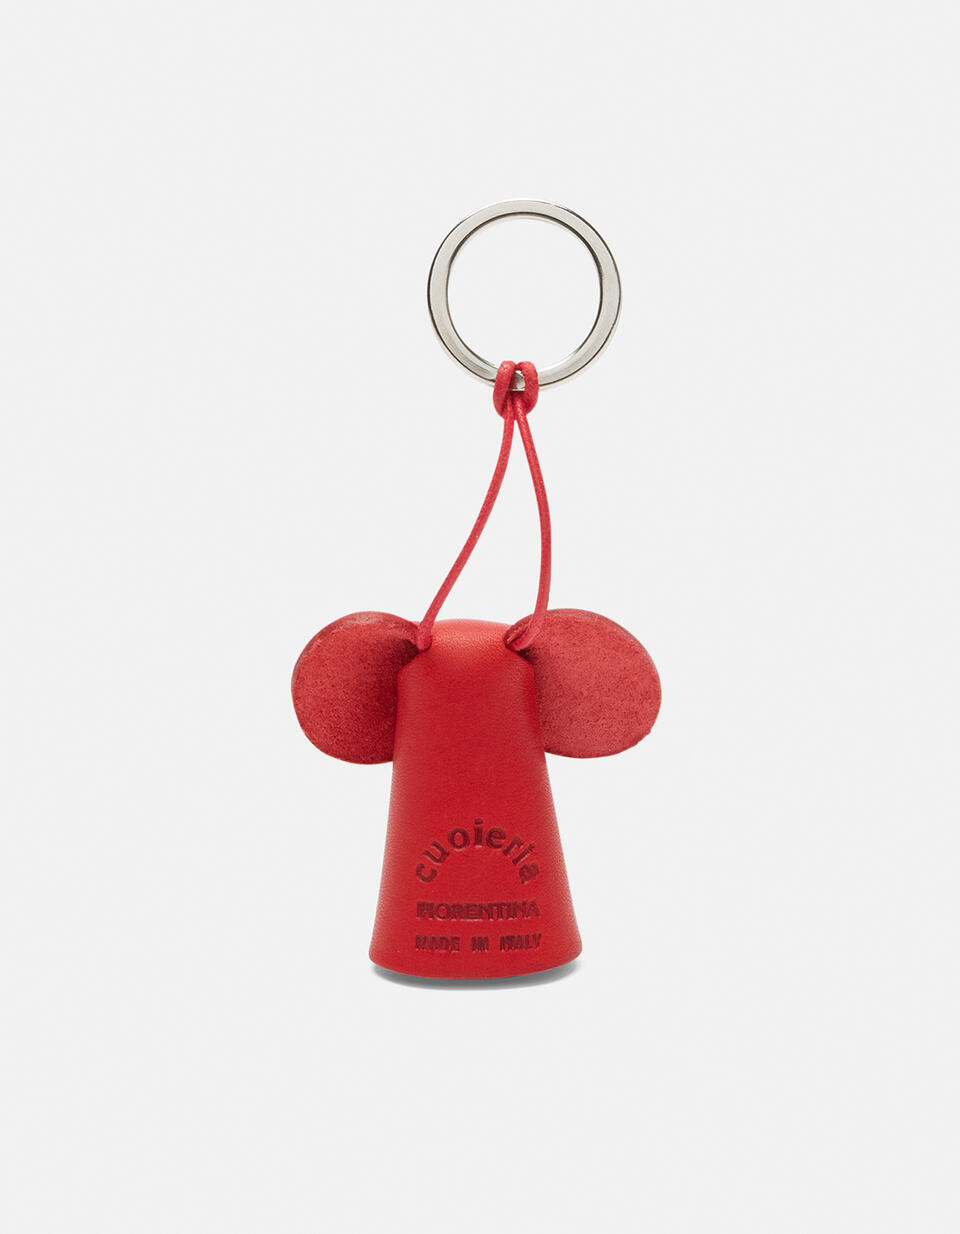 Elefant  Leather keychain - Key holders - Women's Accessories | Accessories ROSSO - Key holders - Women's Accessories | AccessoriesCuoieria Fiorentina